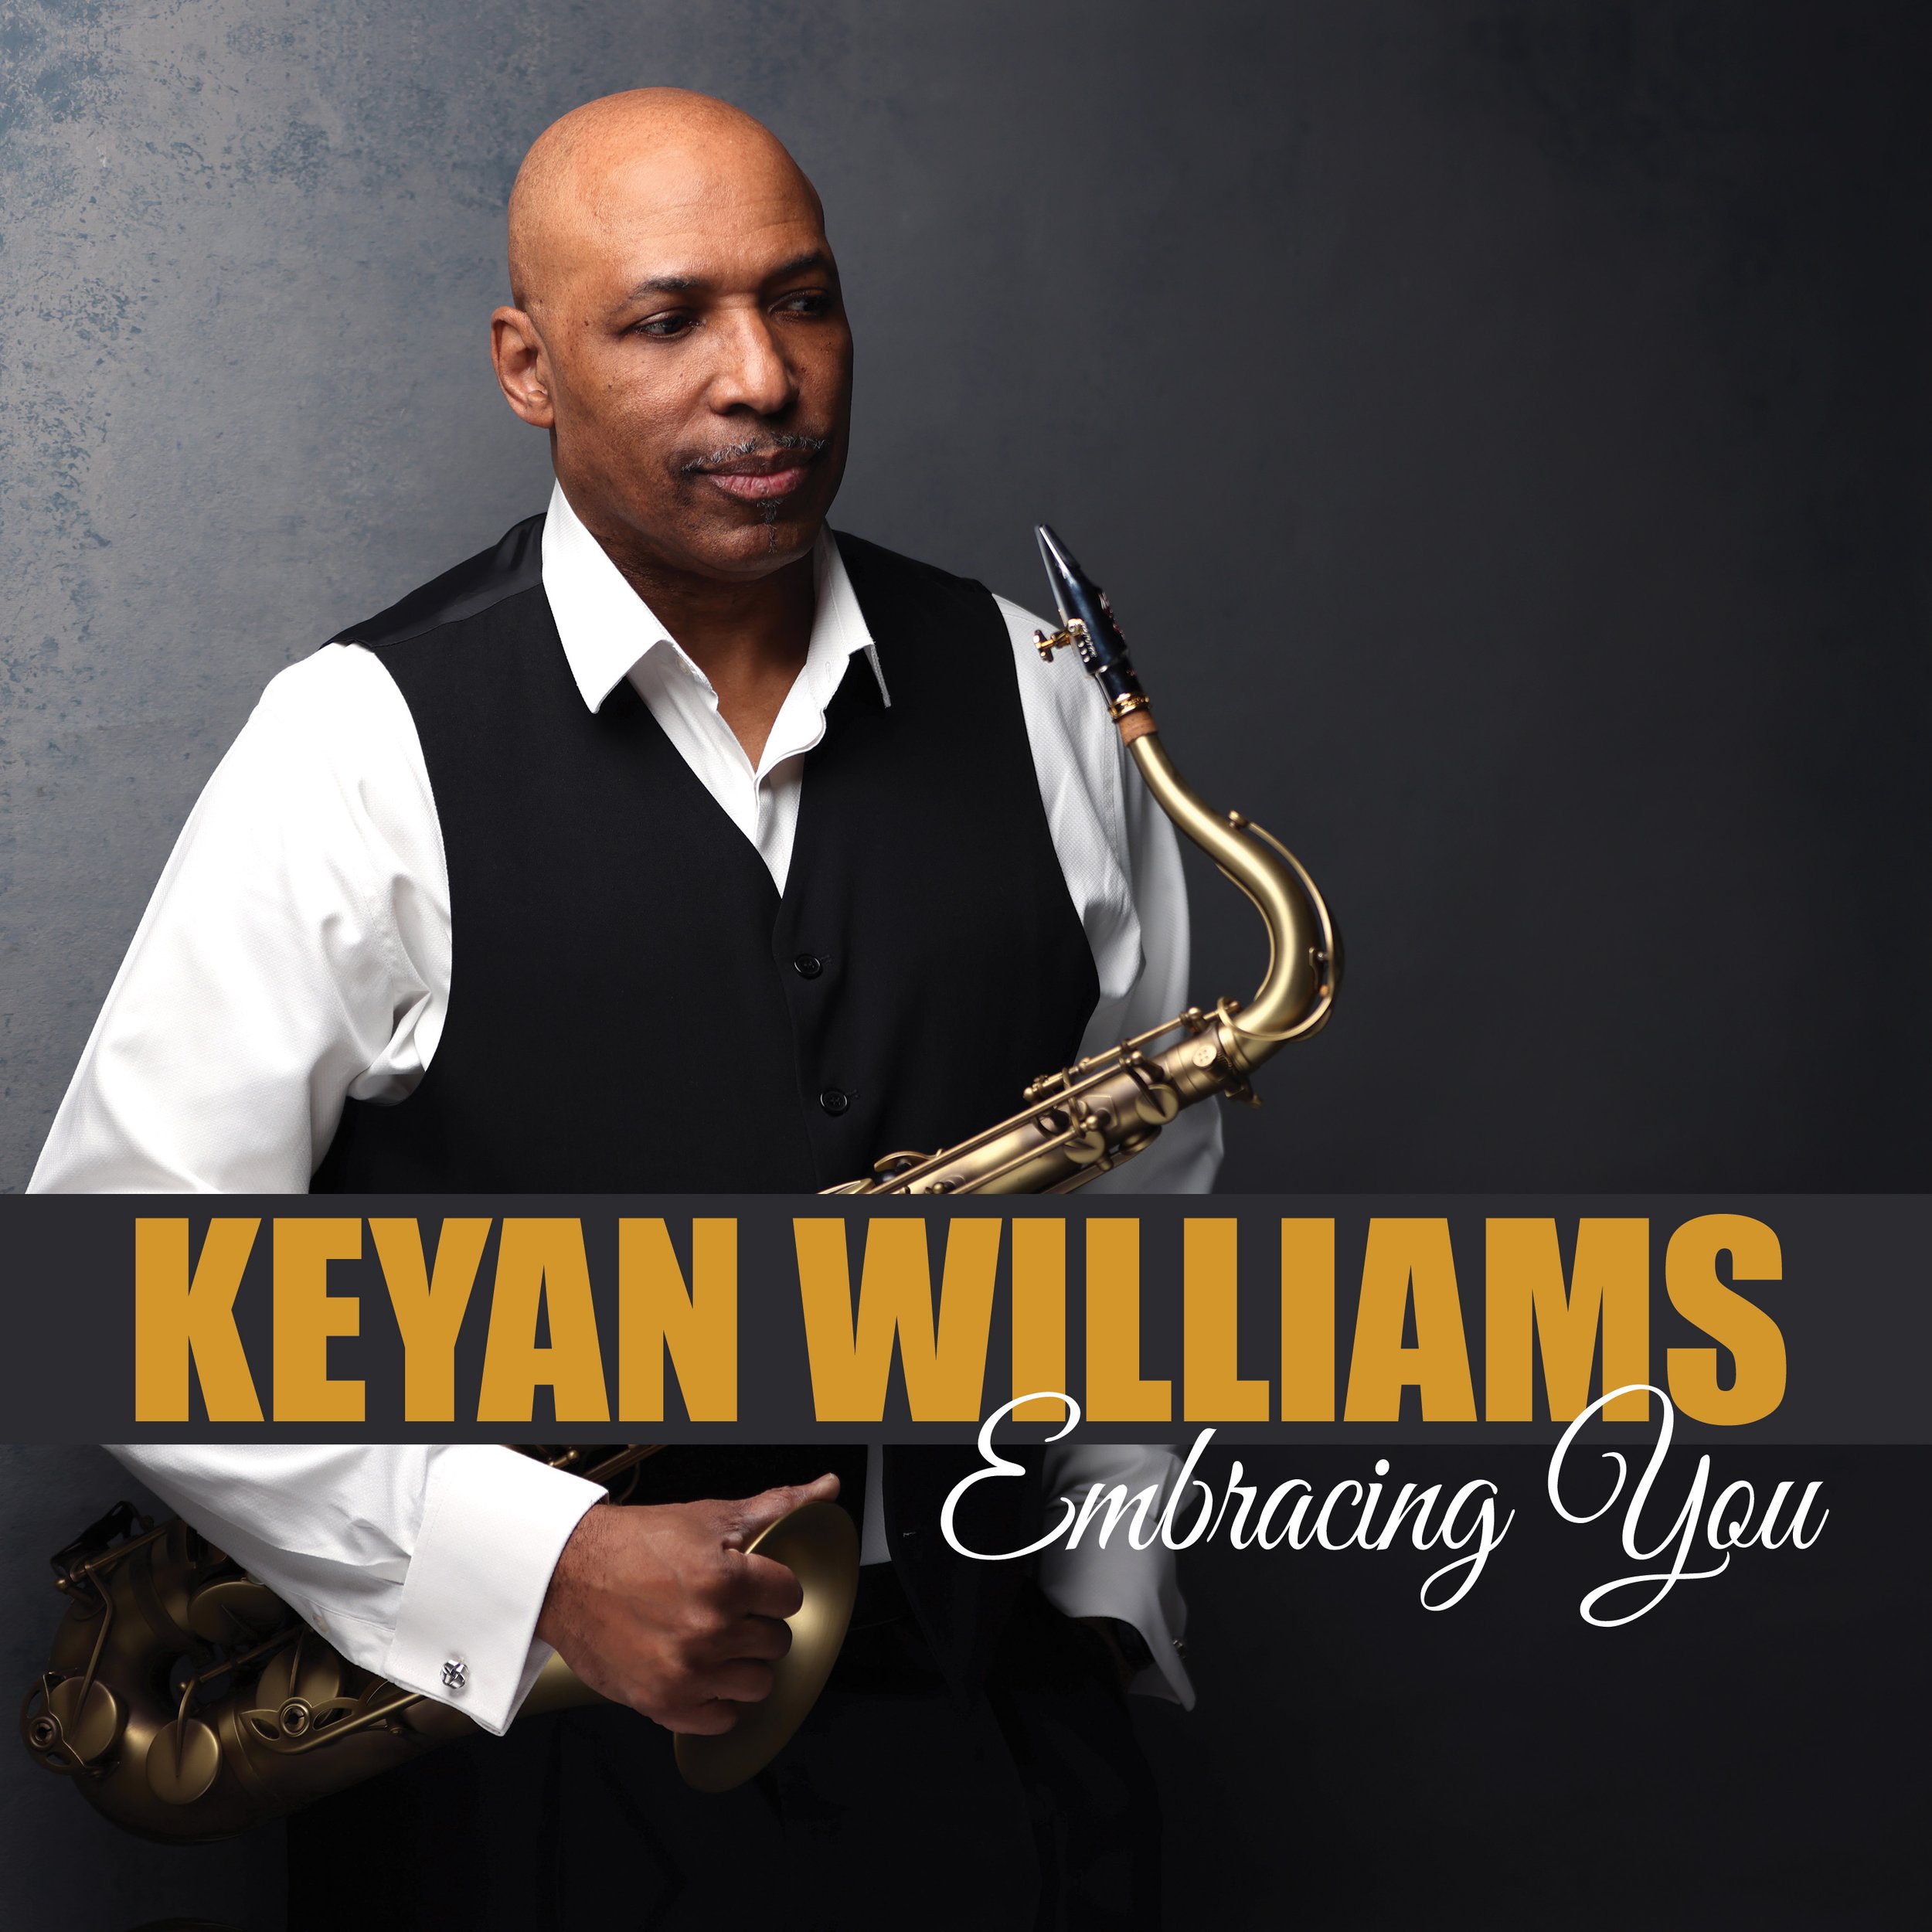 Keyan Williams "Embracing You" Single